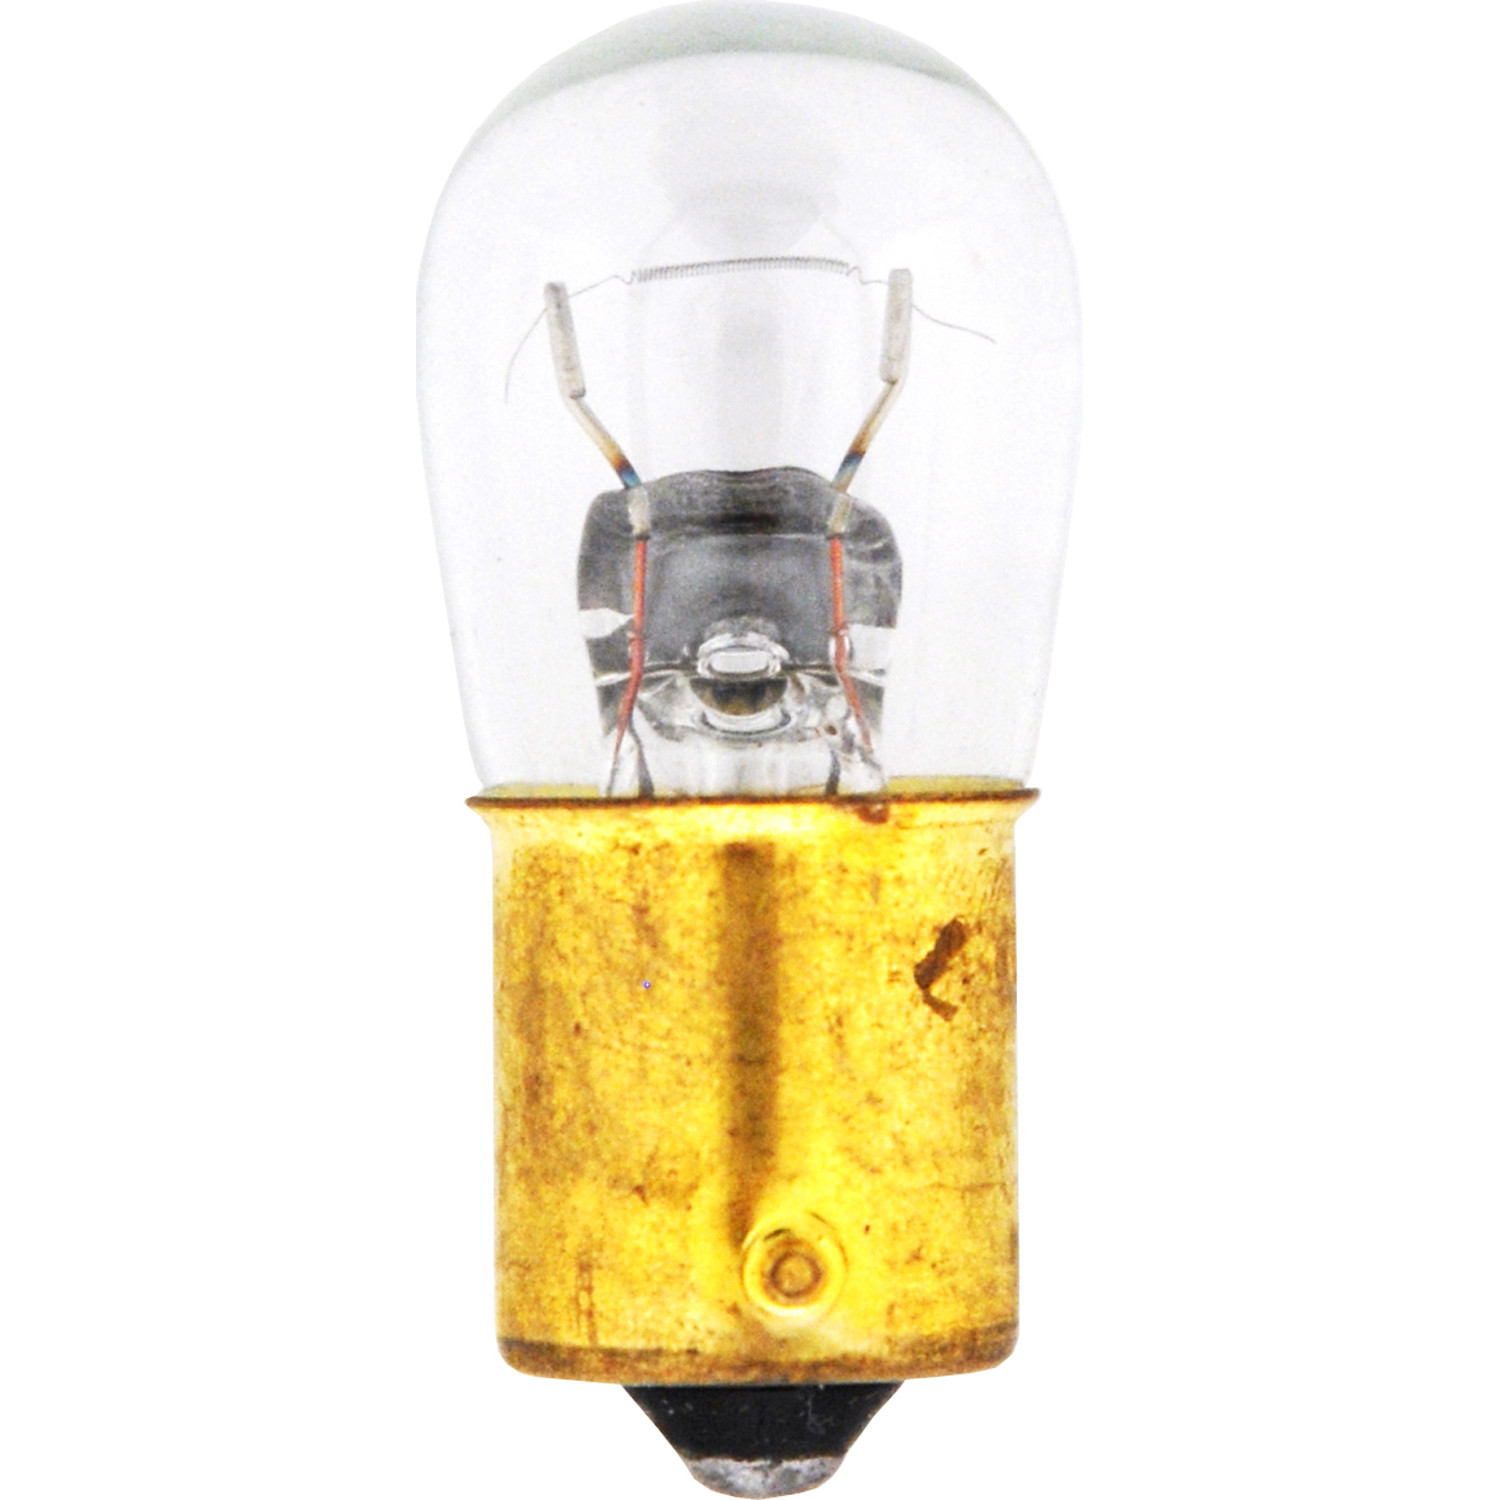 SYLVANIA RETAIL PACKS - Blister Pack Twin Dome Light Bulb - SYR 1003.BP2